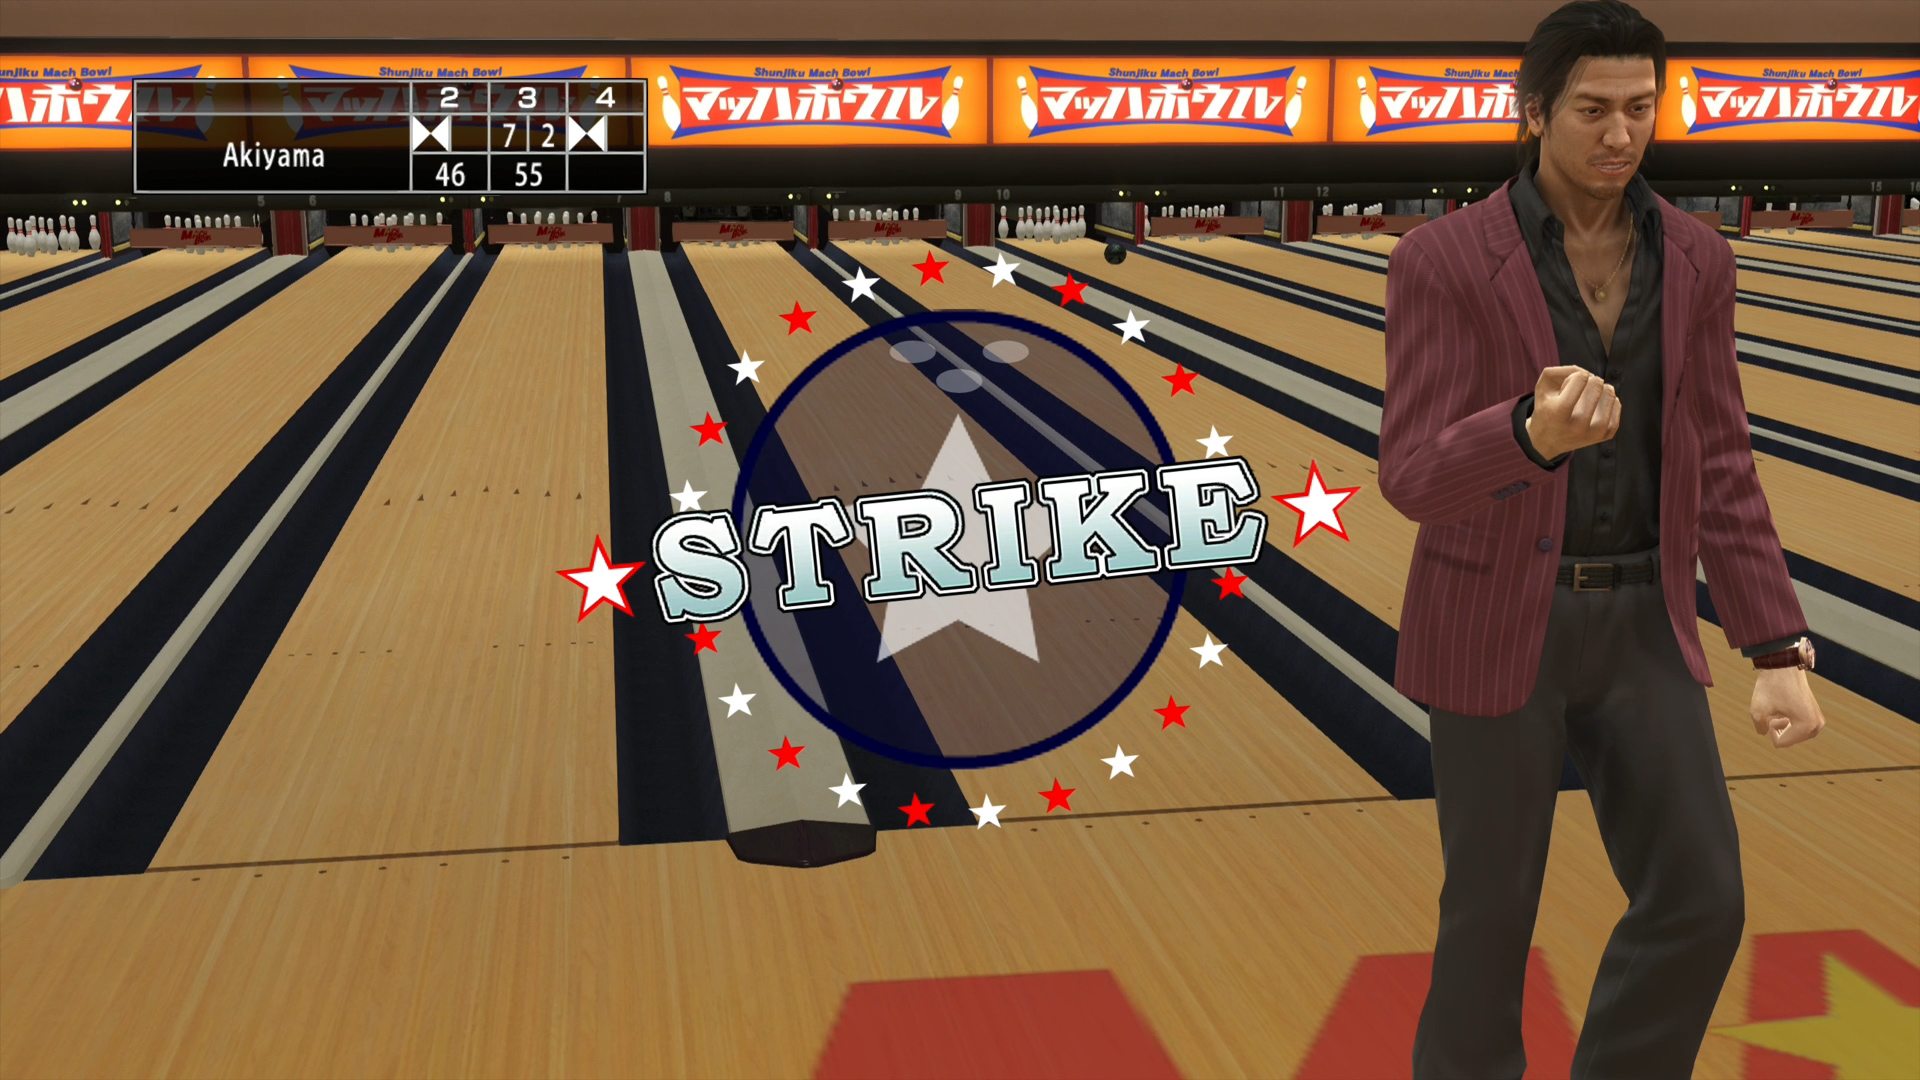 Yakuza remastered collection screenshot 1 bowling